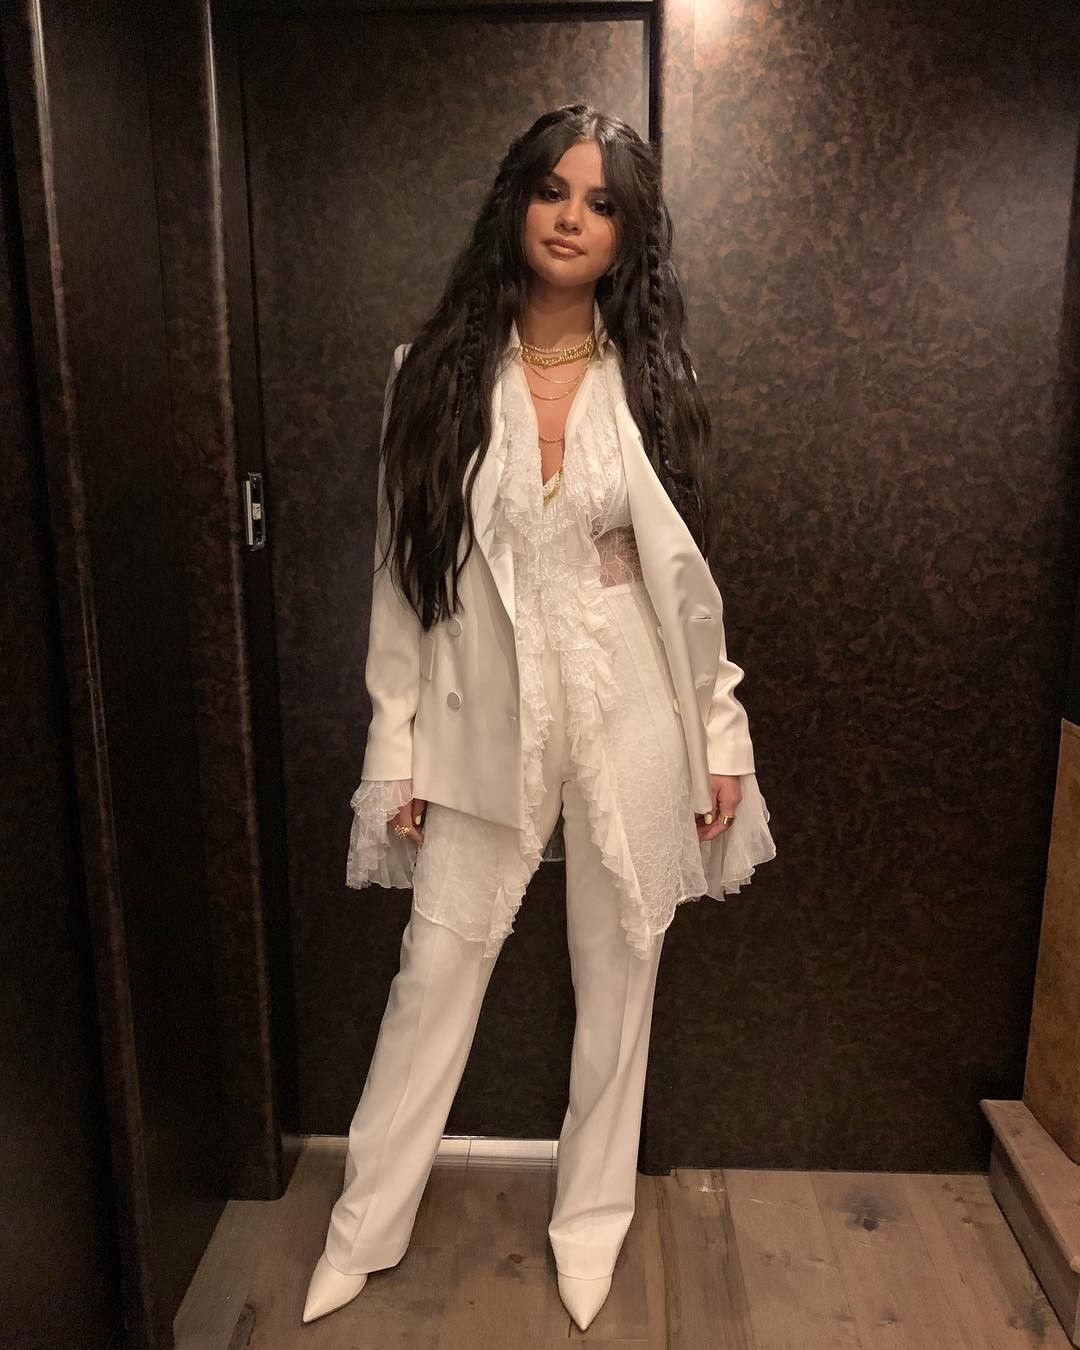 2019 Coachella's Queen Selena Gomez Wallpaper ? -   9 hair Selena Gomez demi lovato
 ideas